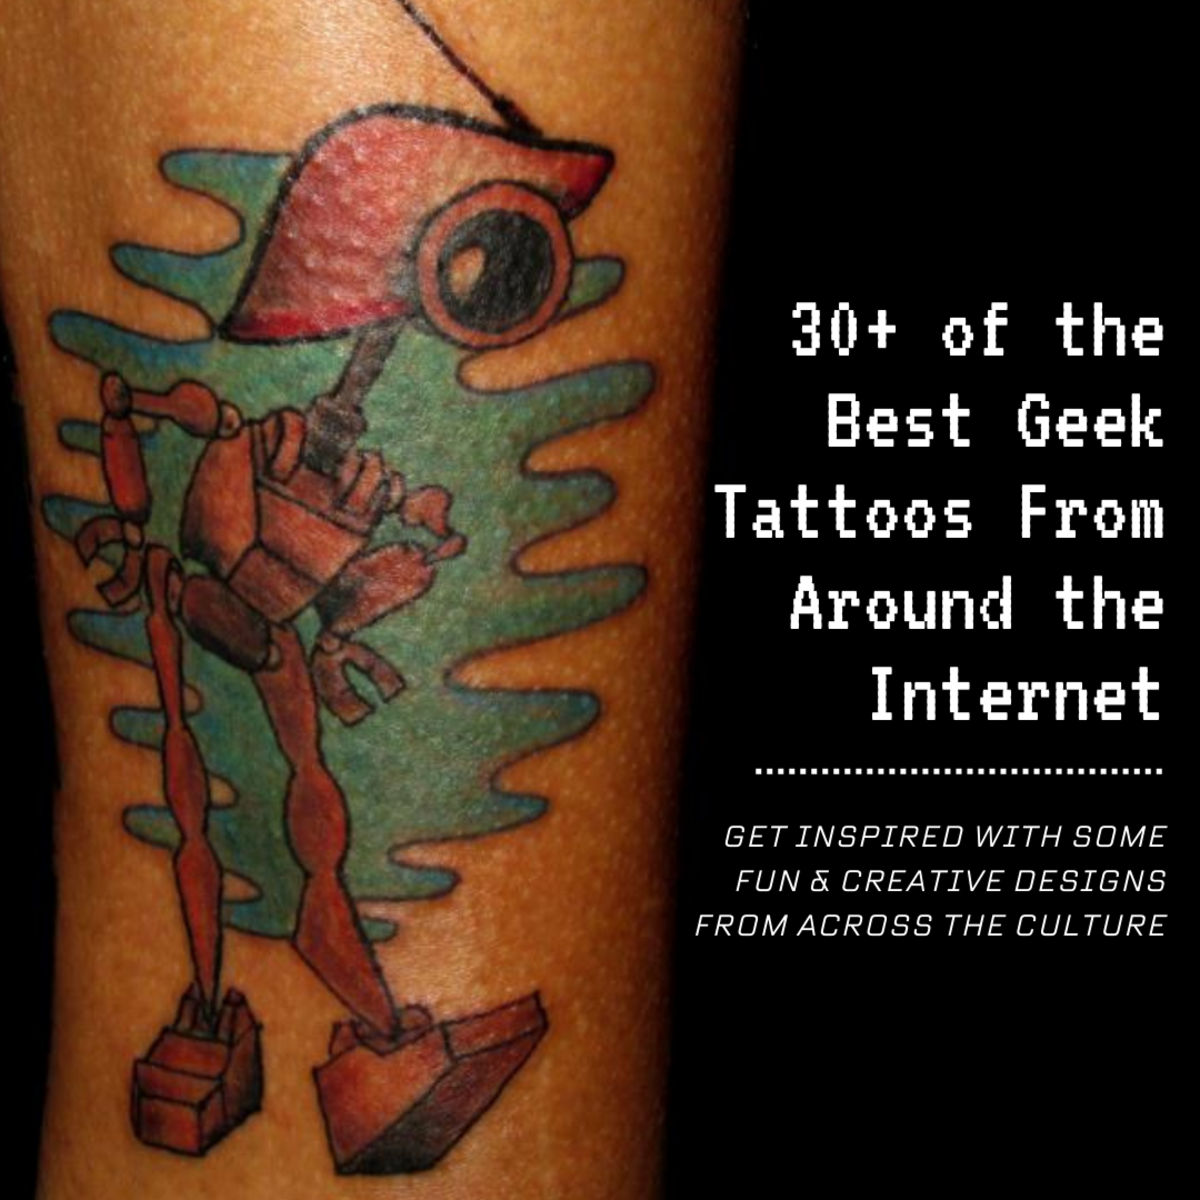 30 of the Best Geek Tattoos